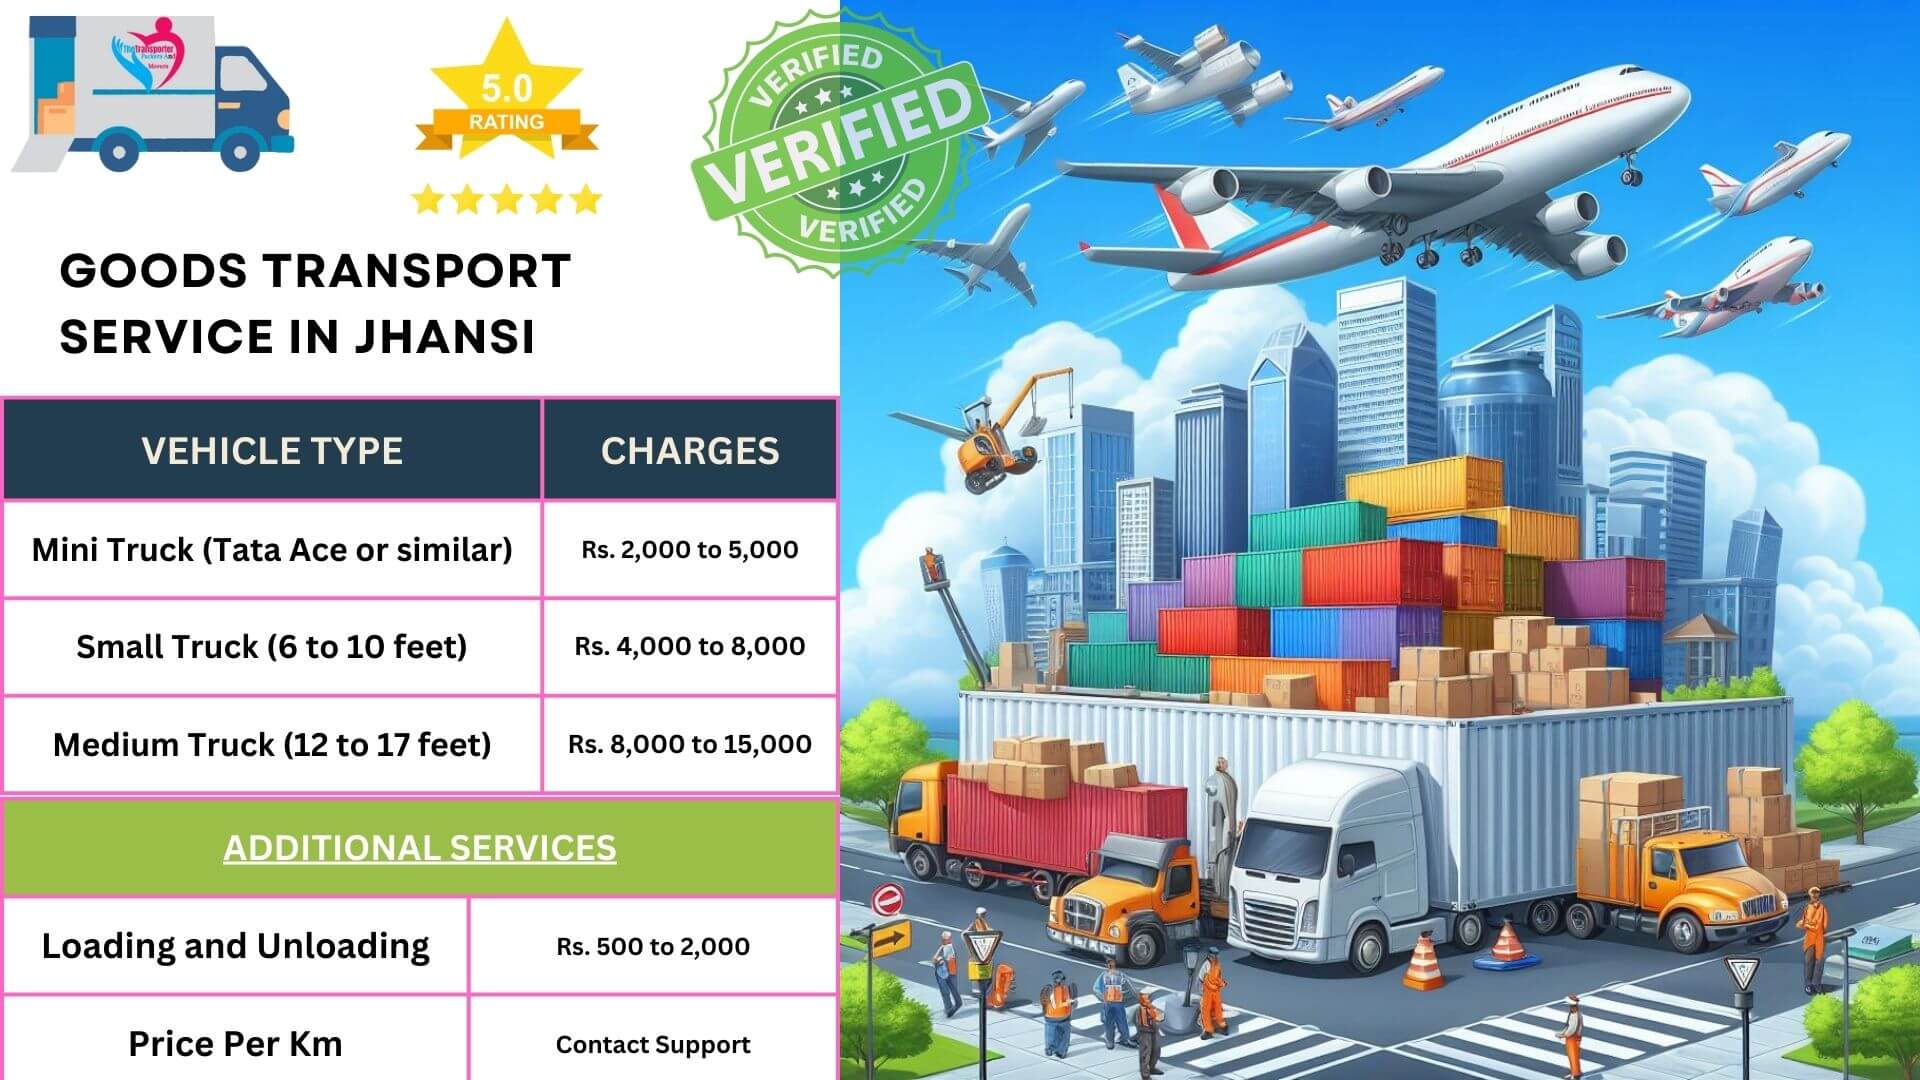 Goods transport services in Jhansi